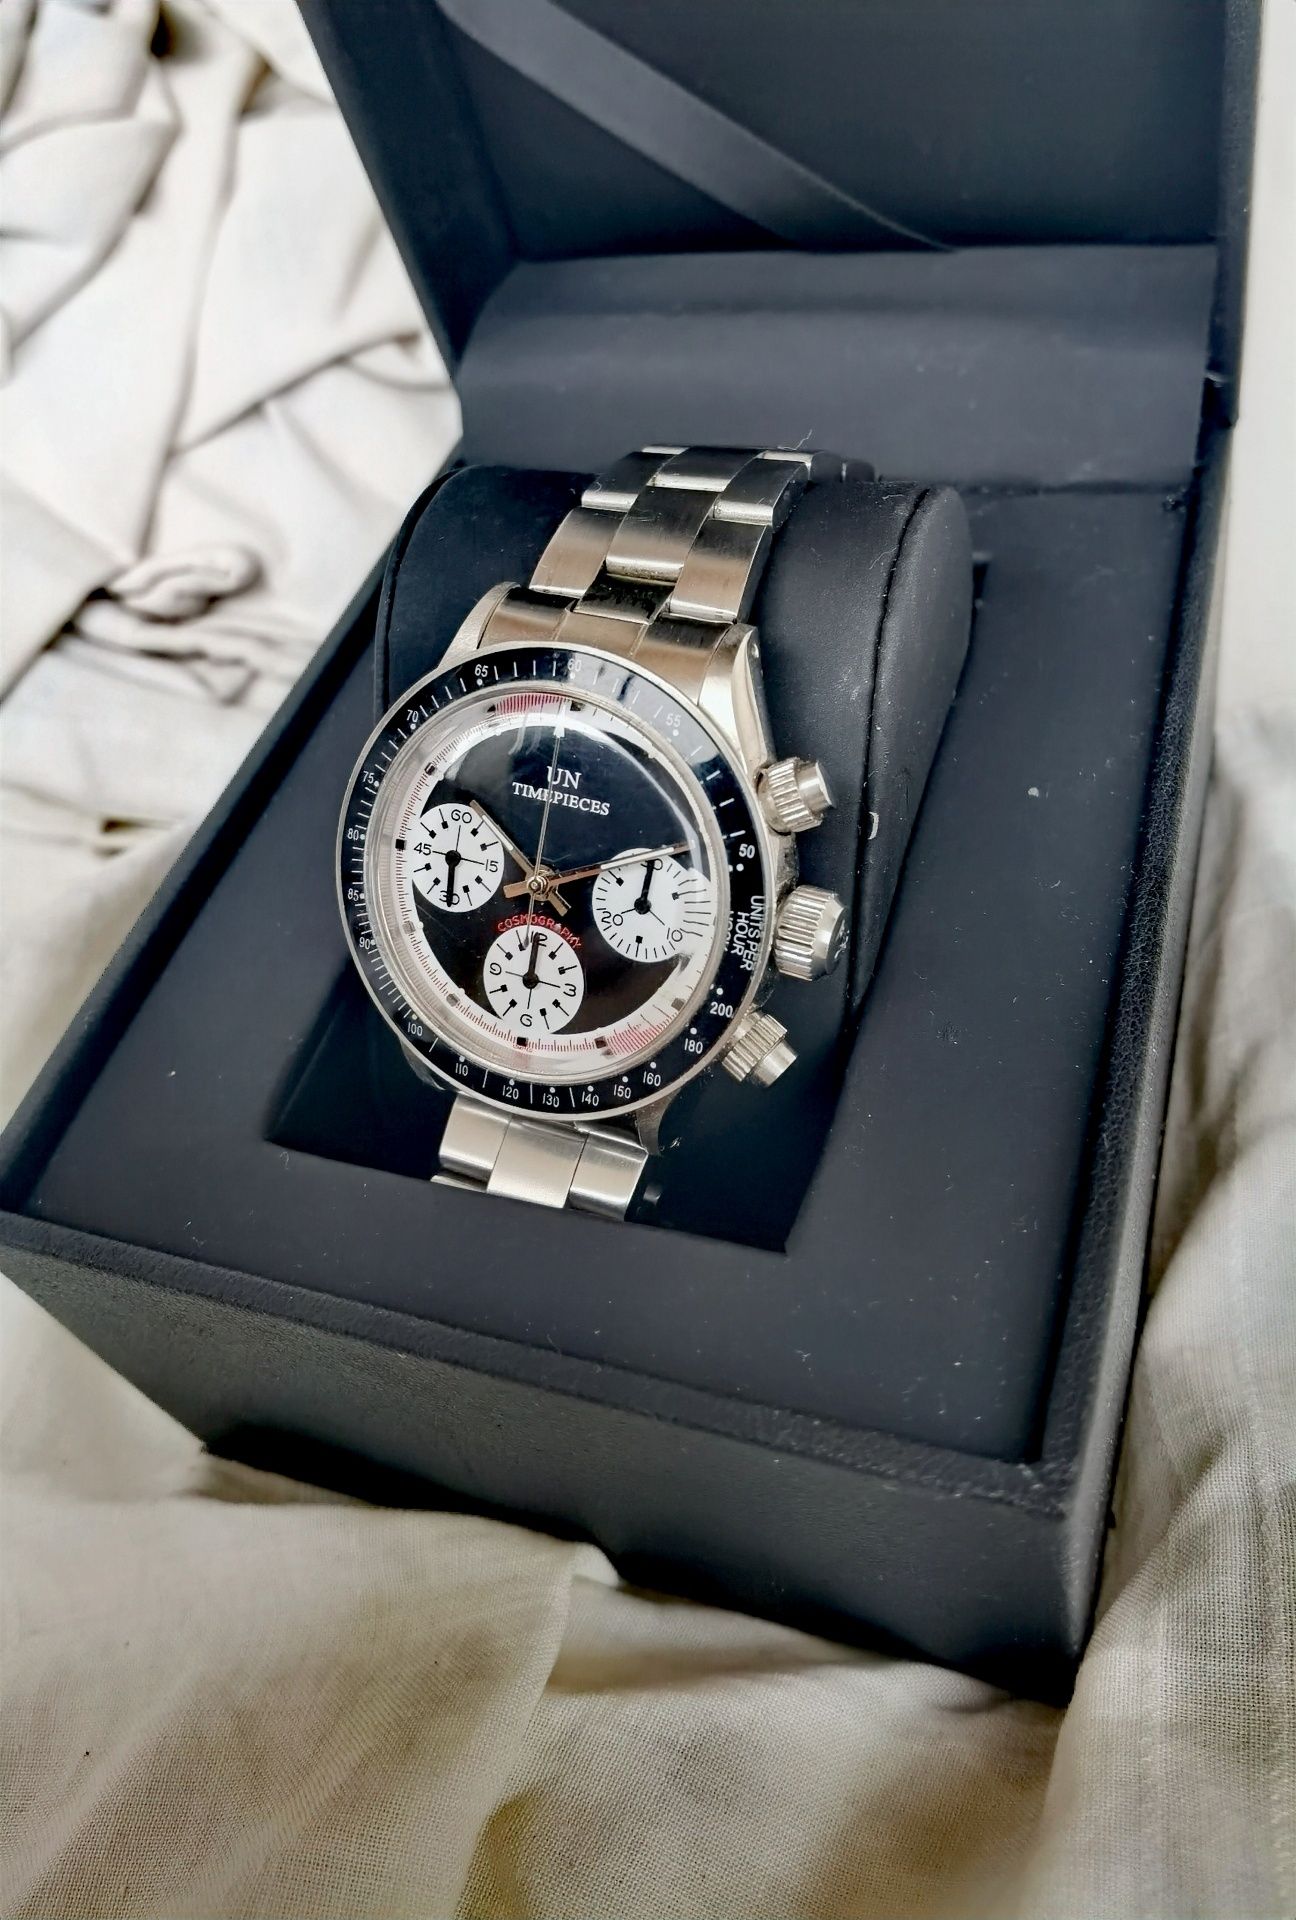 Rolex Cosmography Automatic chronograph 12 часов vintage homage